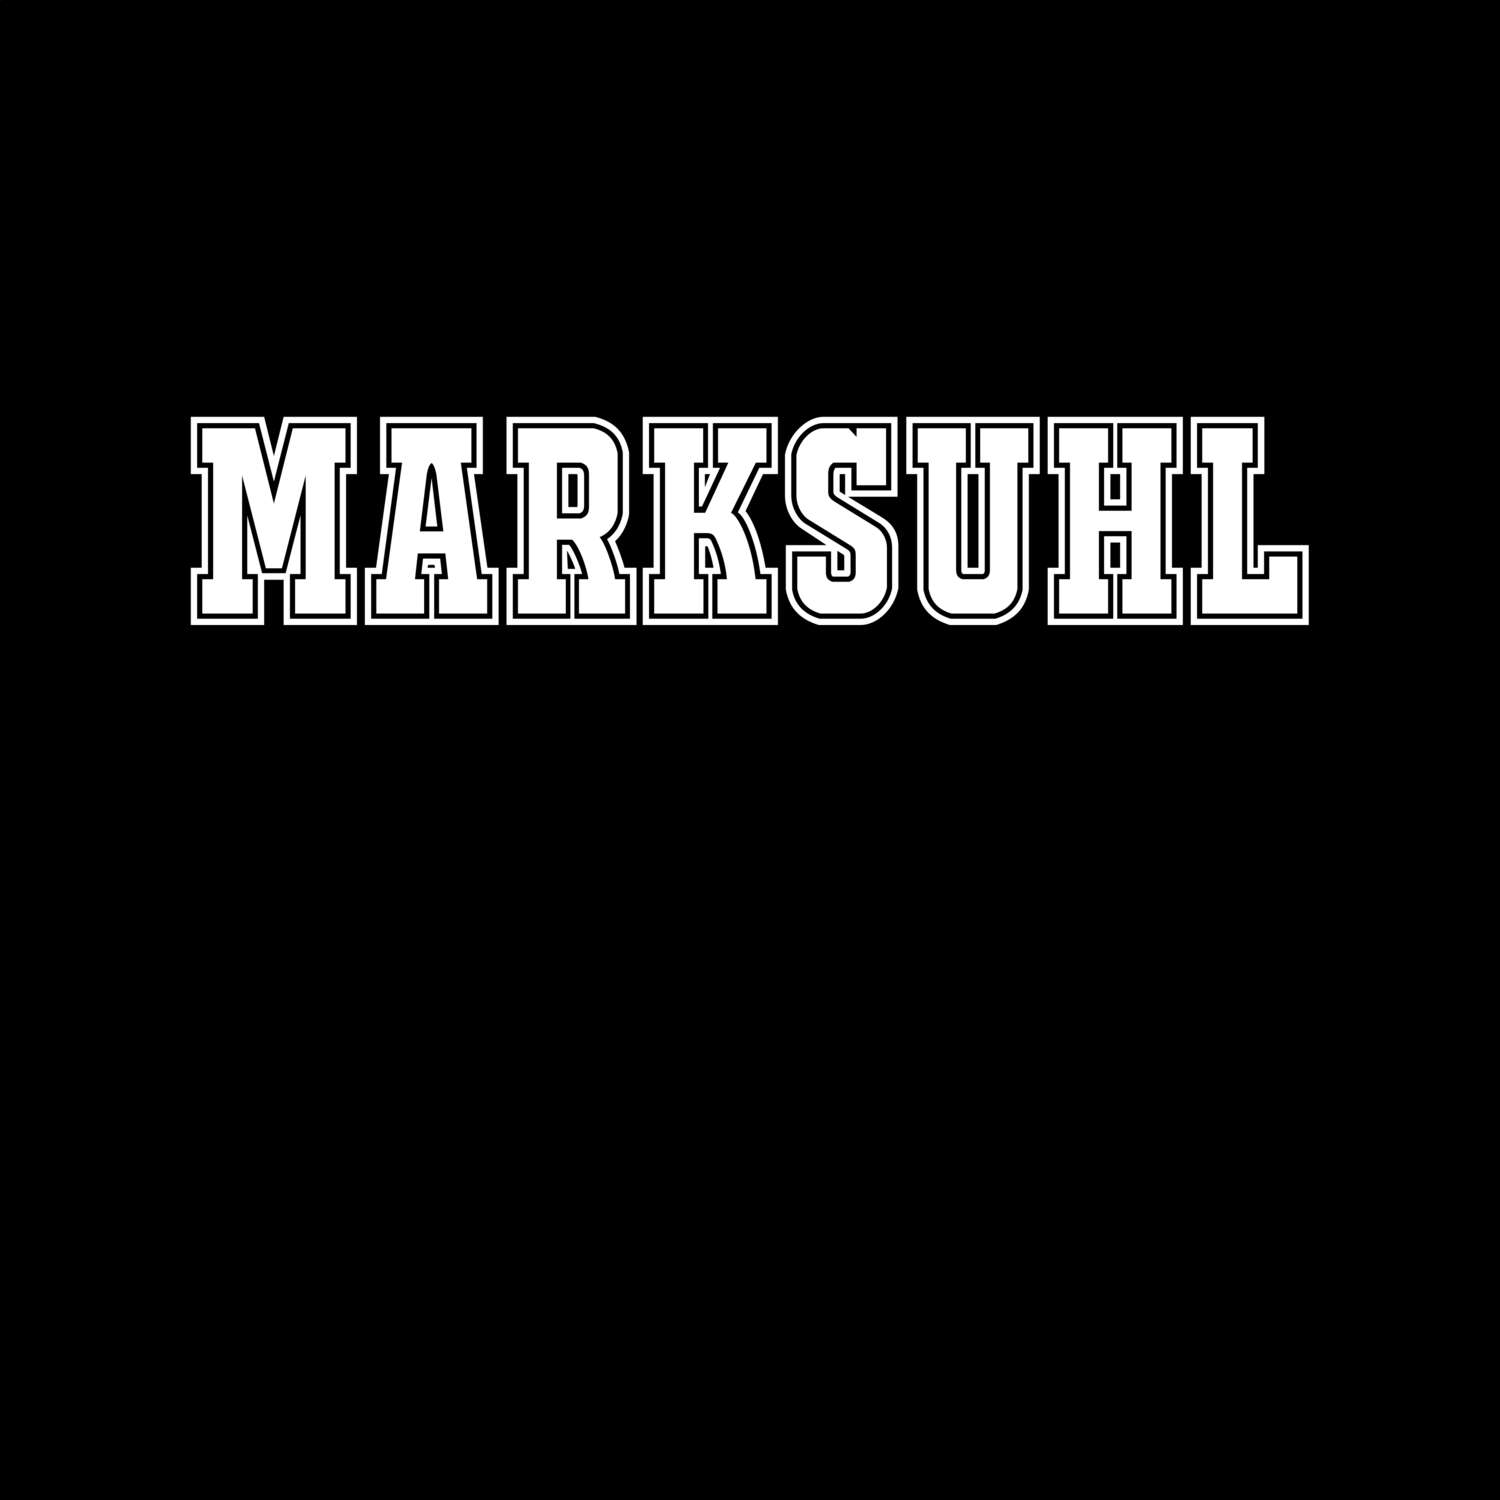 Marksuhl T-Shirt »Classic«